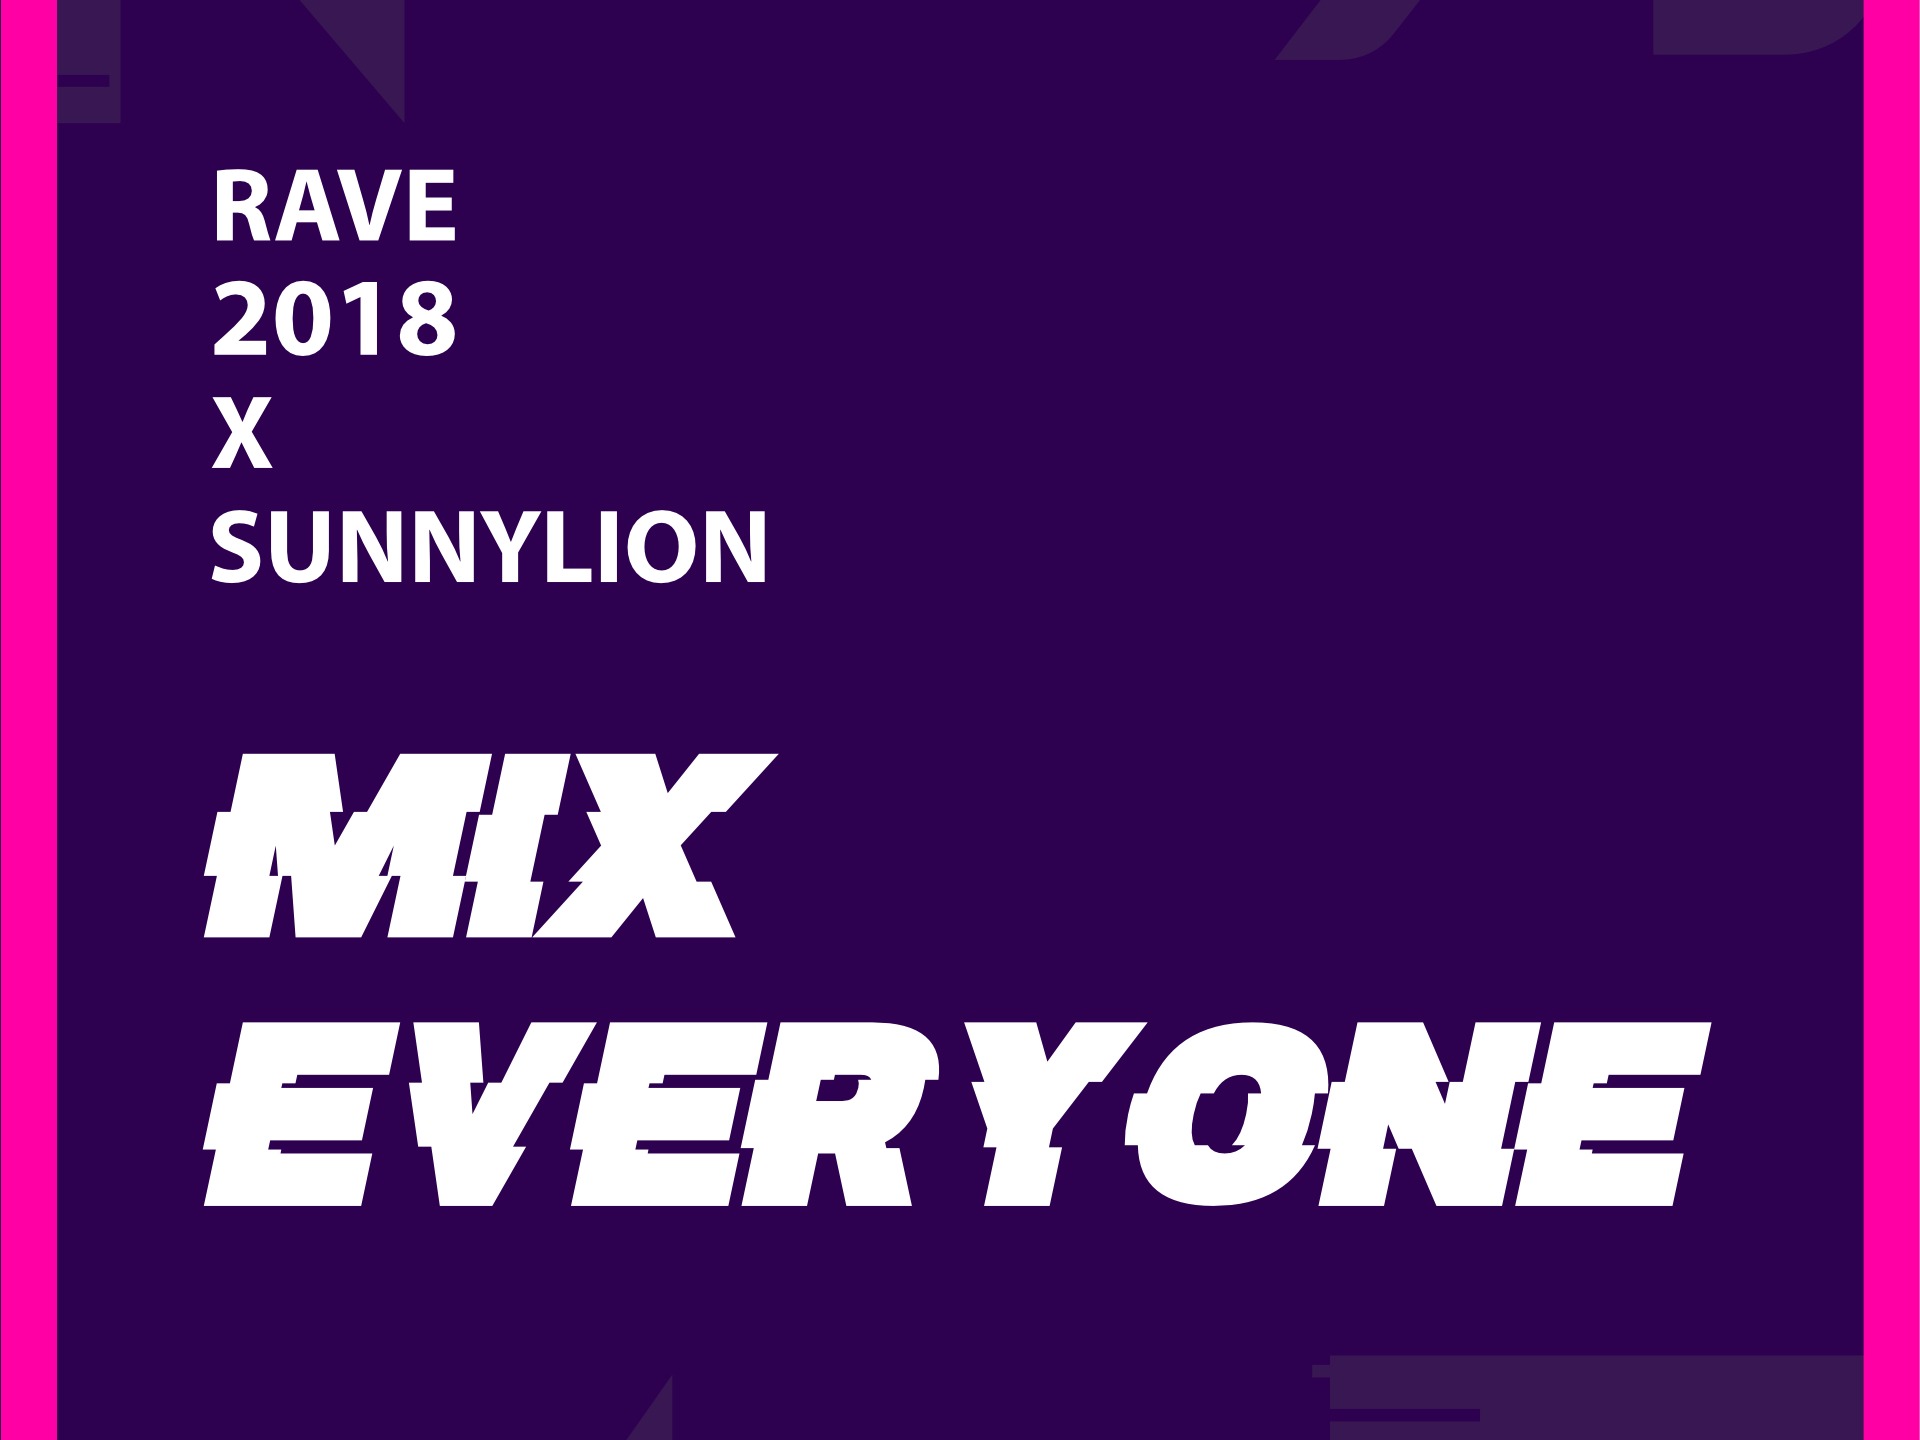 RAVE 2018 X SUNNY LION MIX EVERYONE